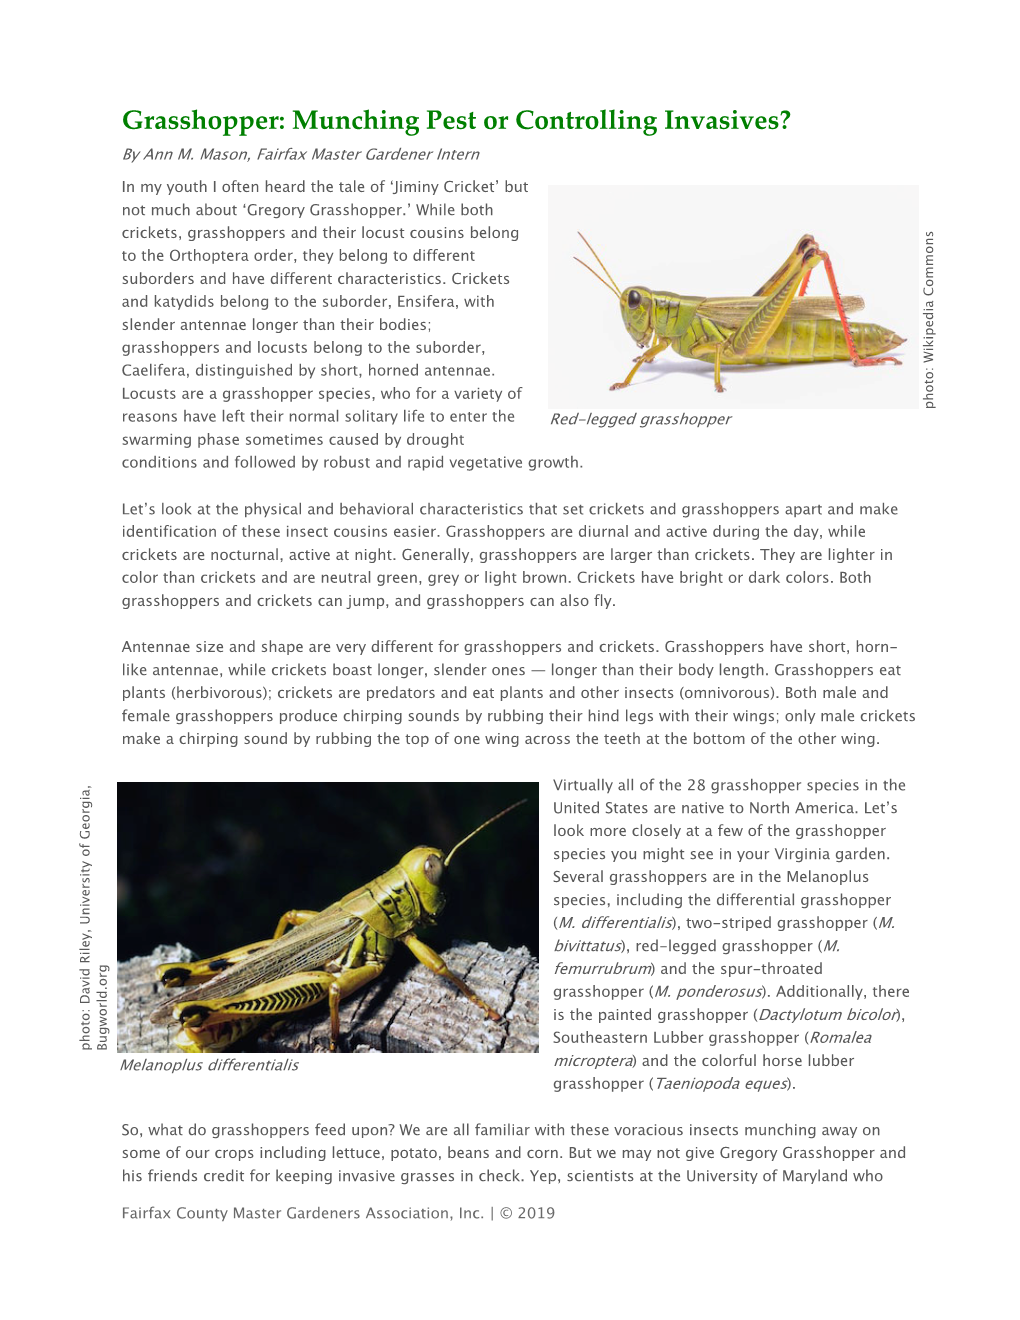 Grasshopper: Munching Pest Or Controlling Invasives?